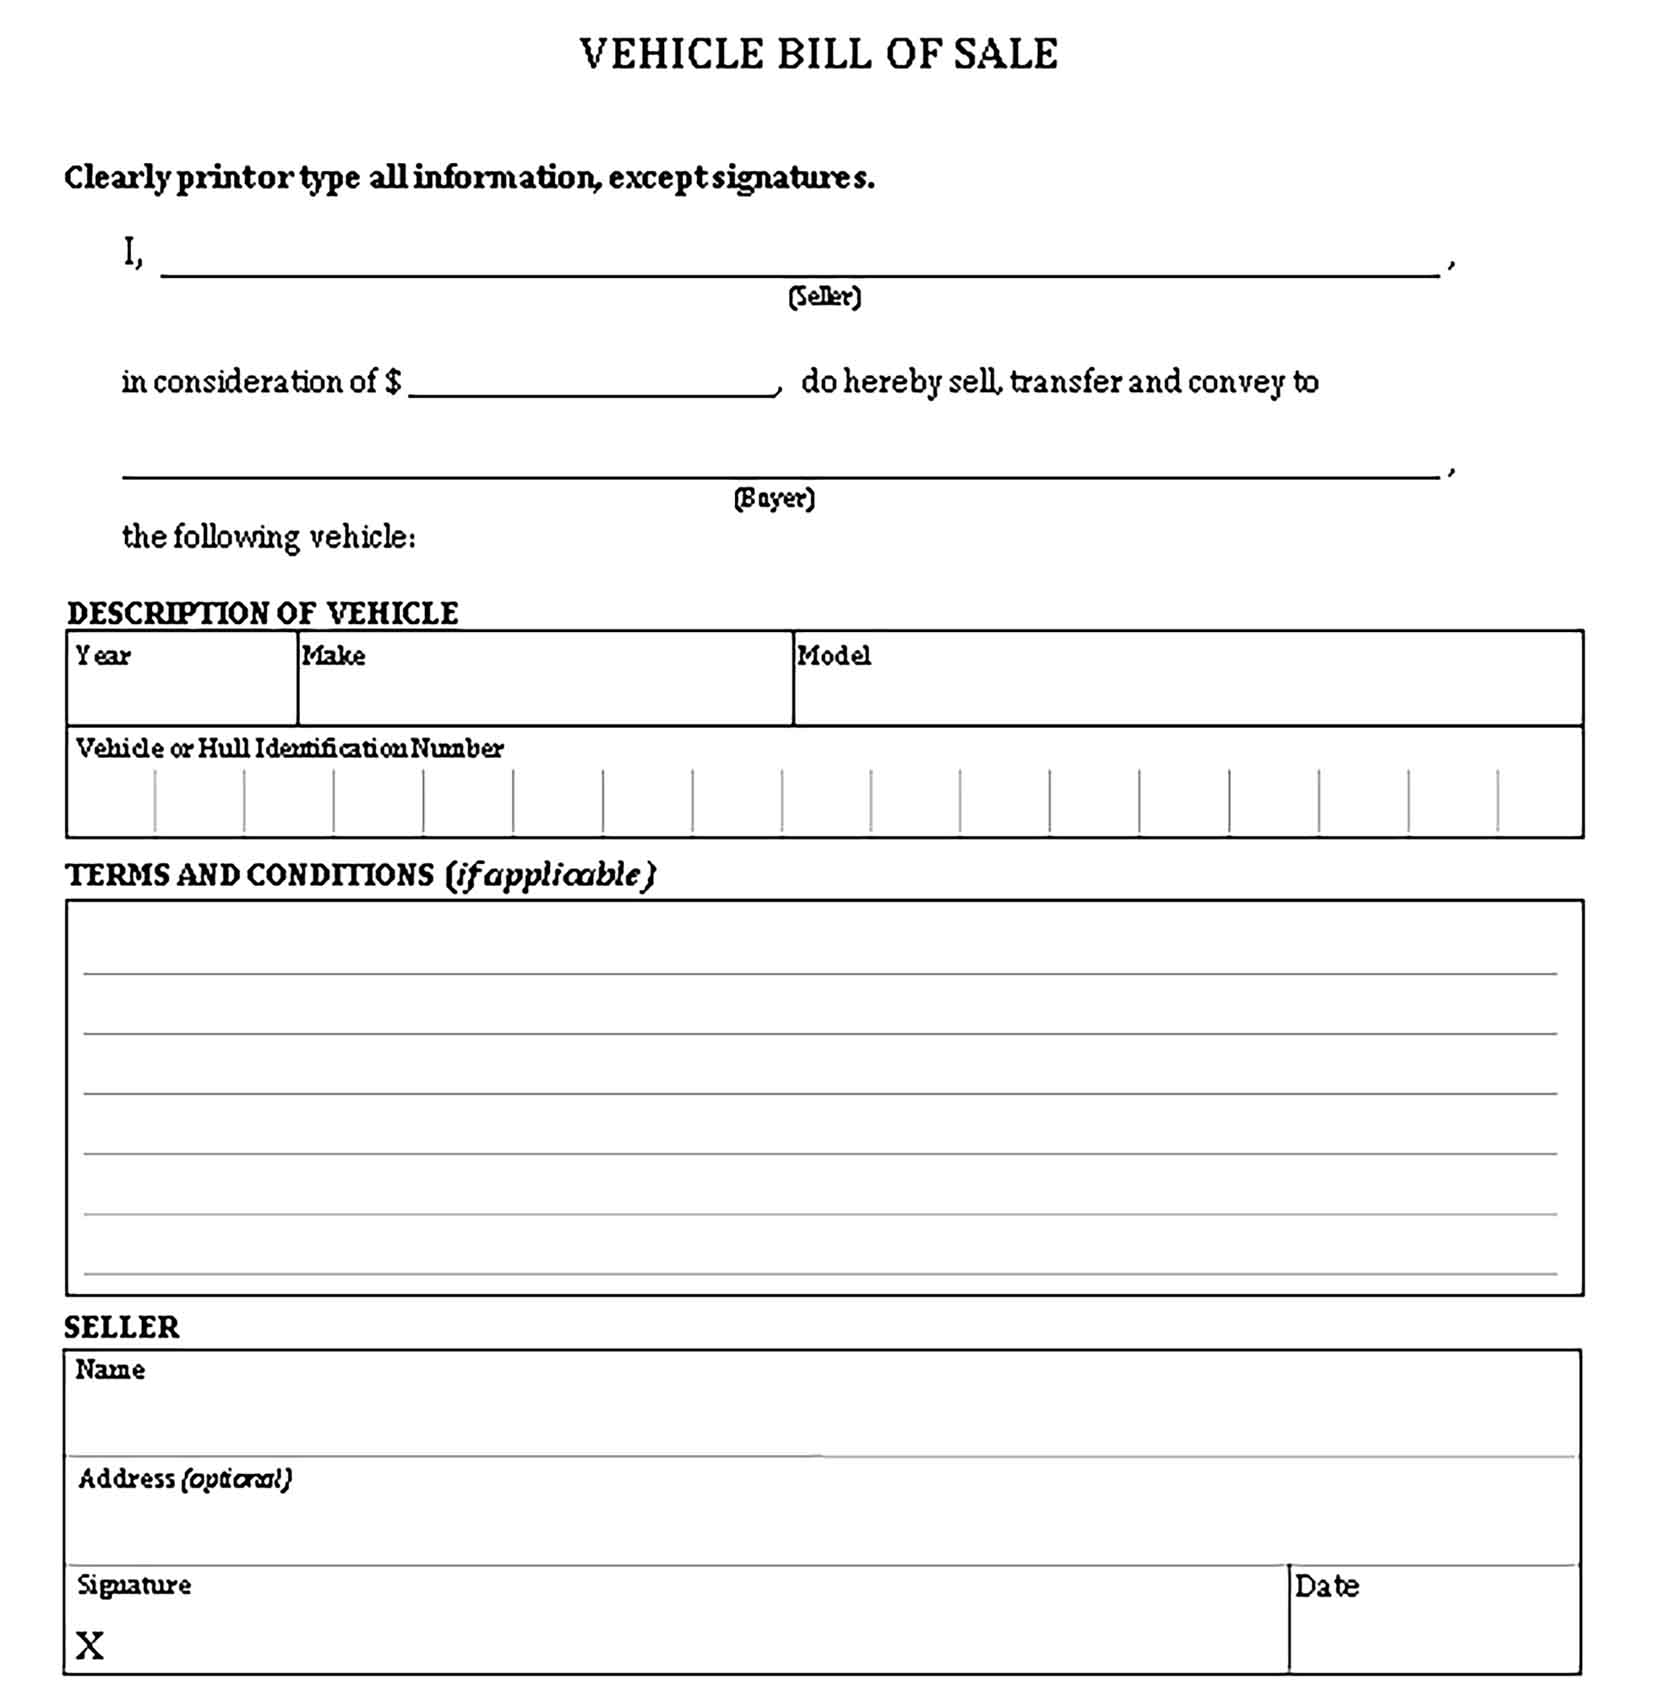 Sample Templates ny vehicle bill of sale